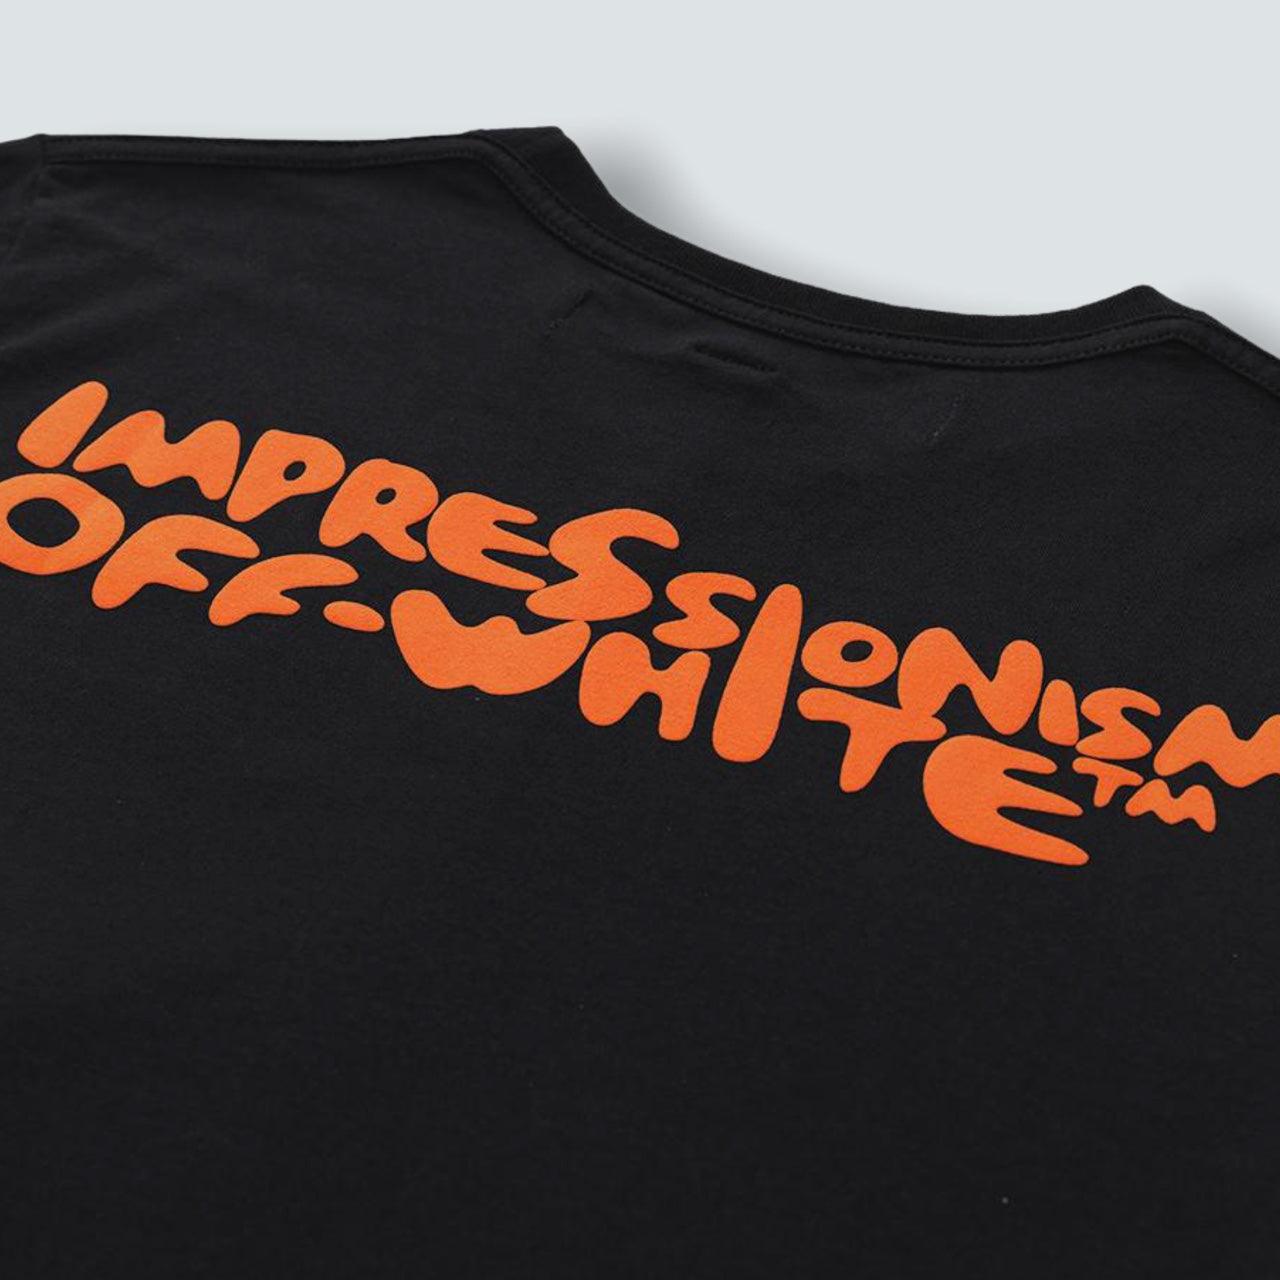 Off-white SS/19 Impressionism Orange Graphic Black Tee T-shirt (L) - Known Source